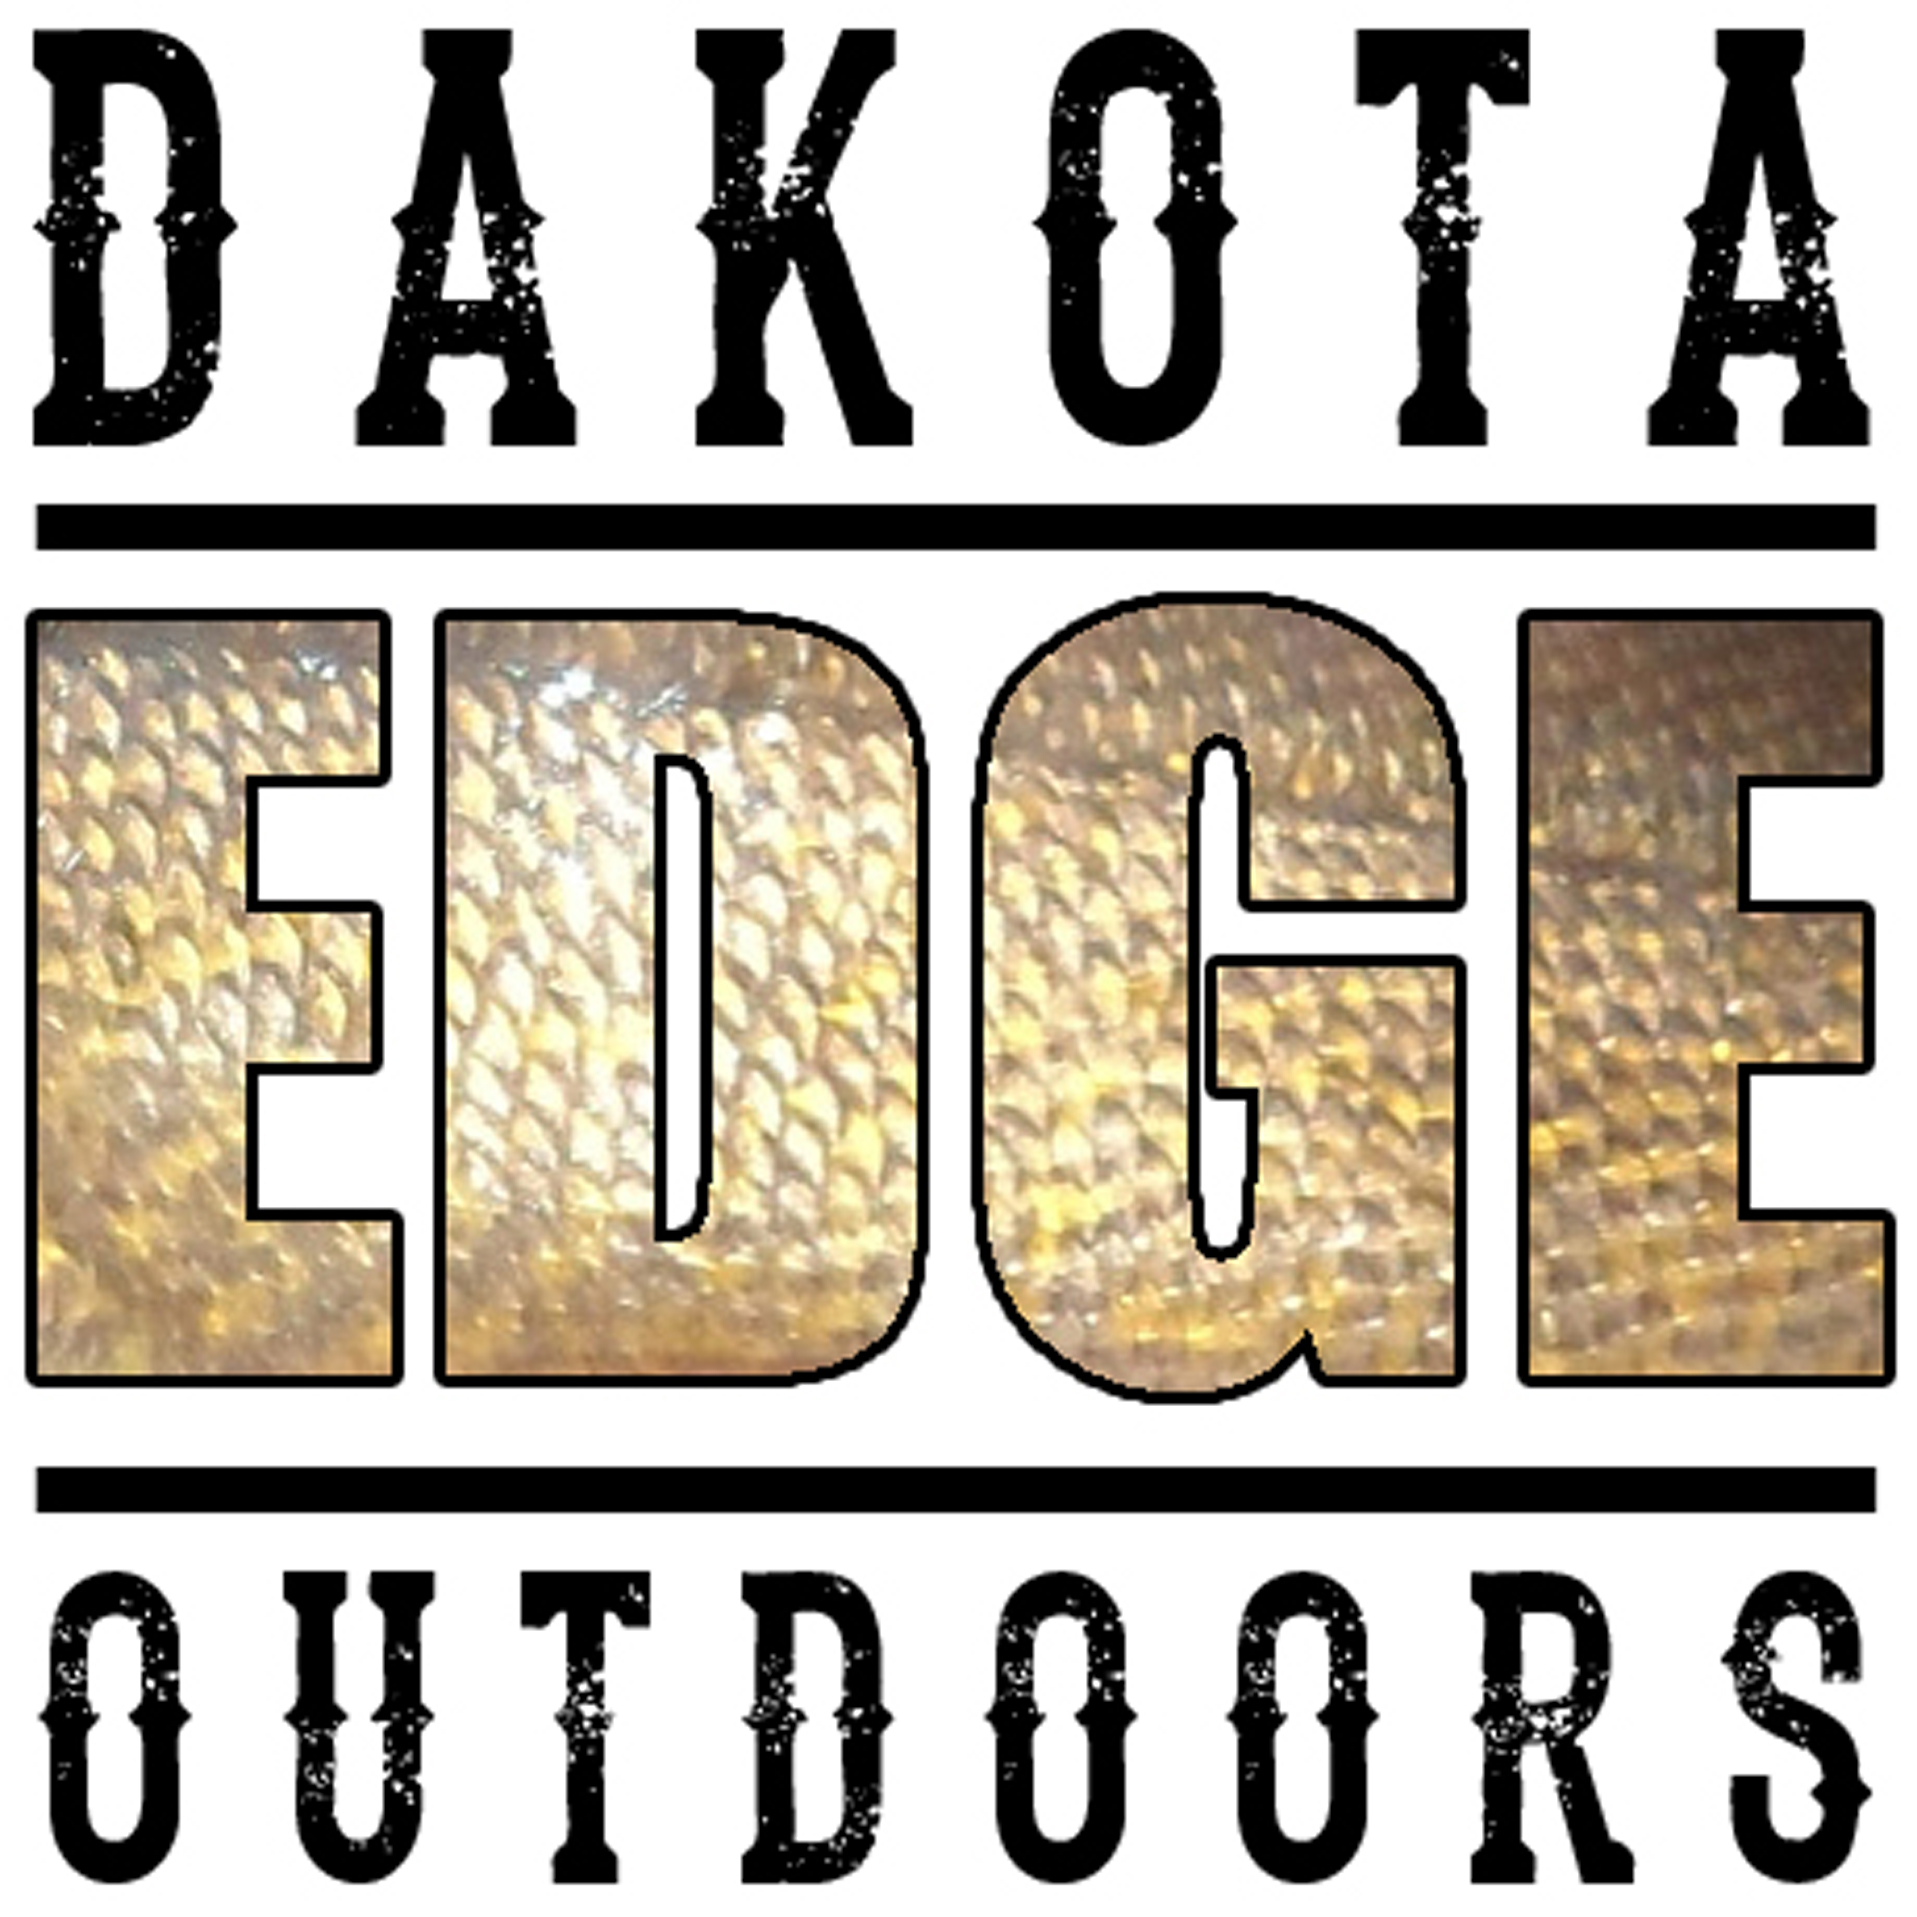 Podcasts & Radio Shows from Dakota Edge Outdoors